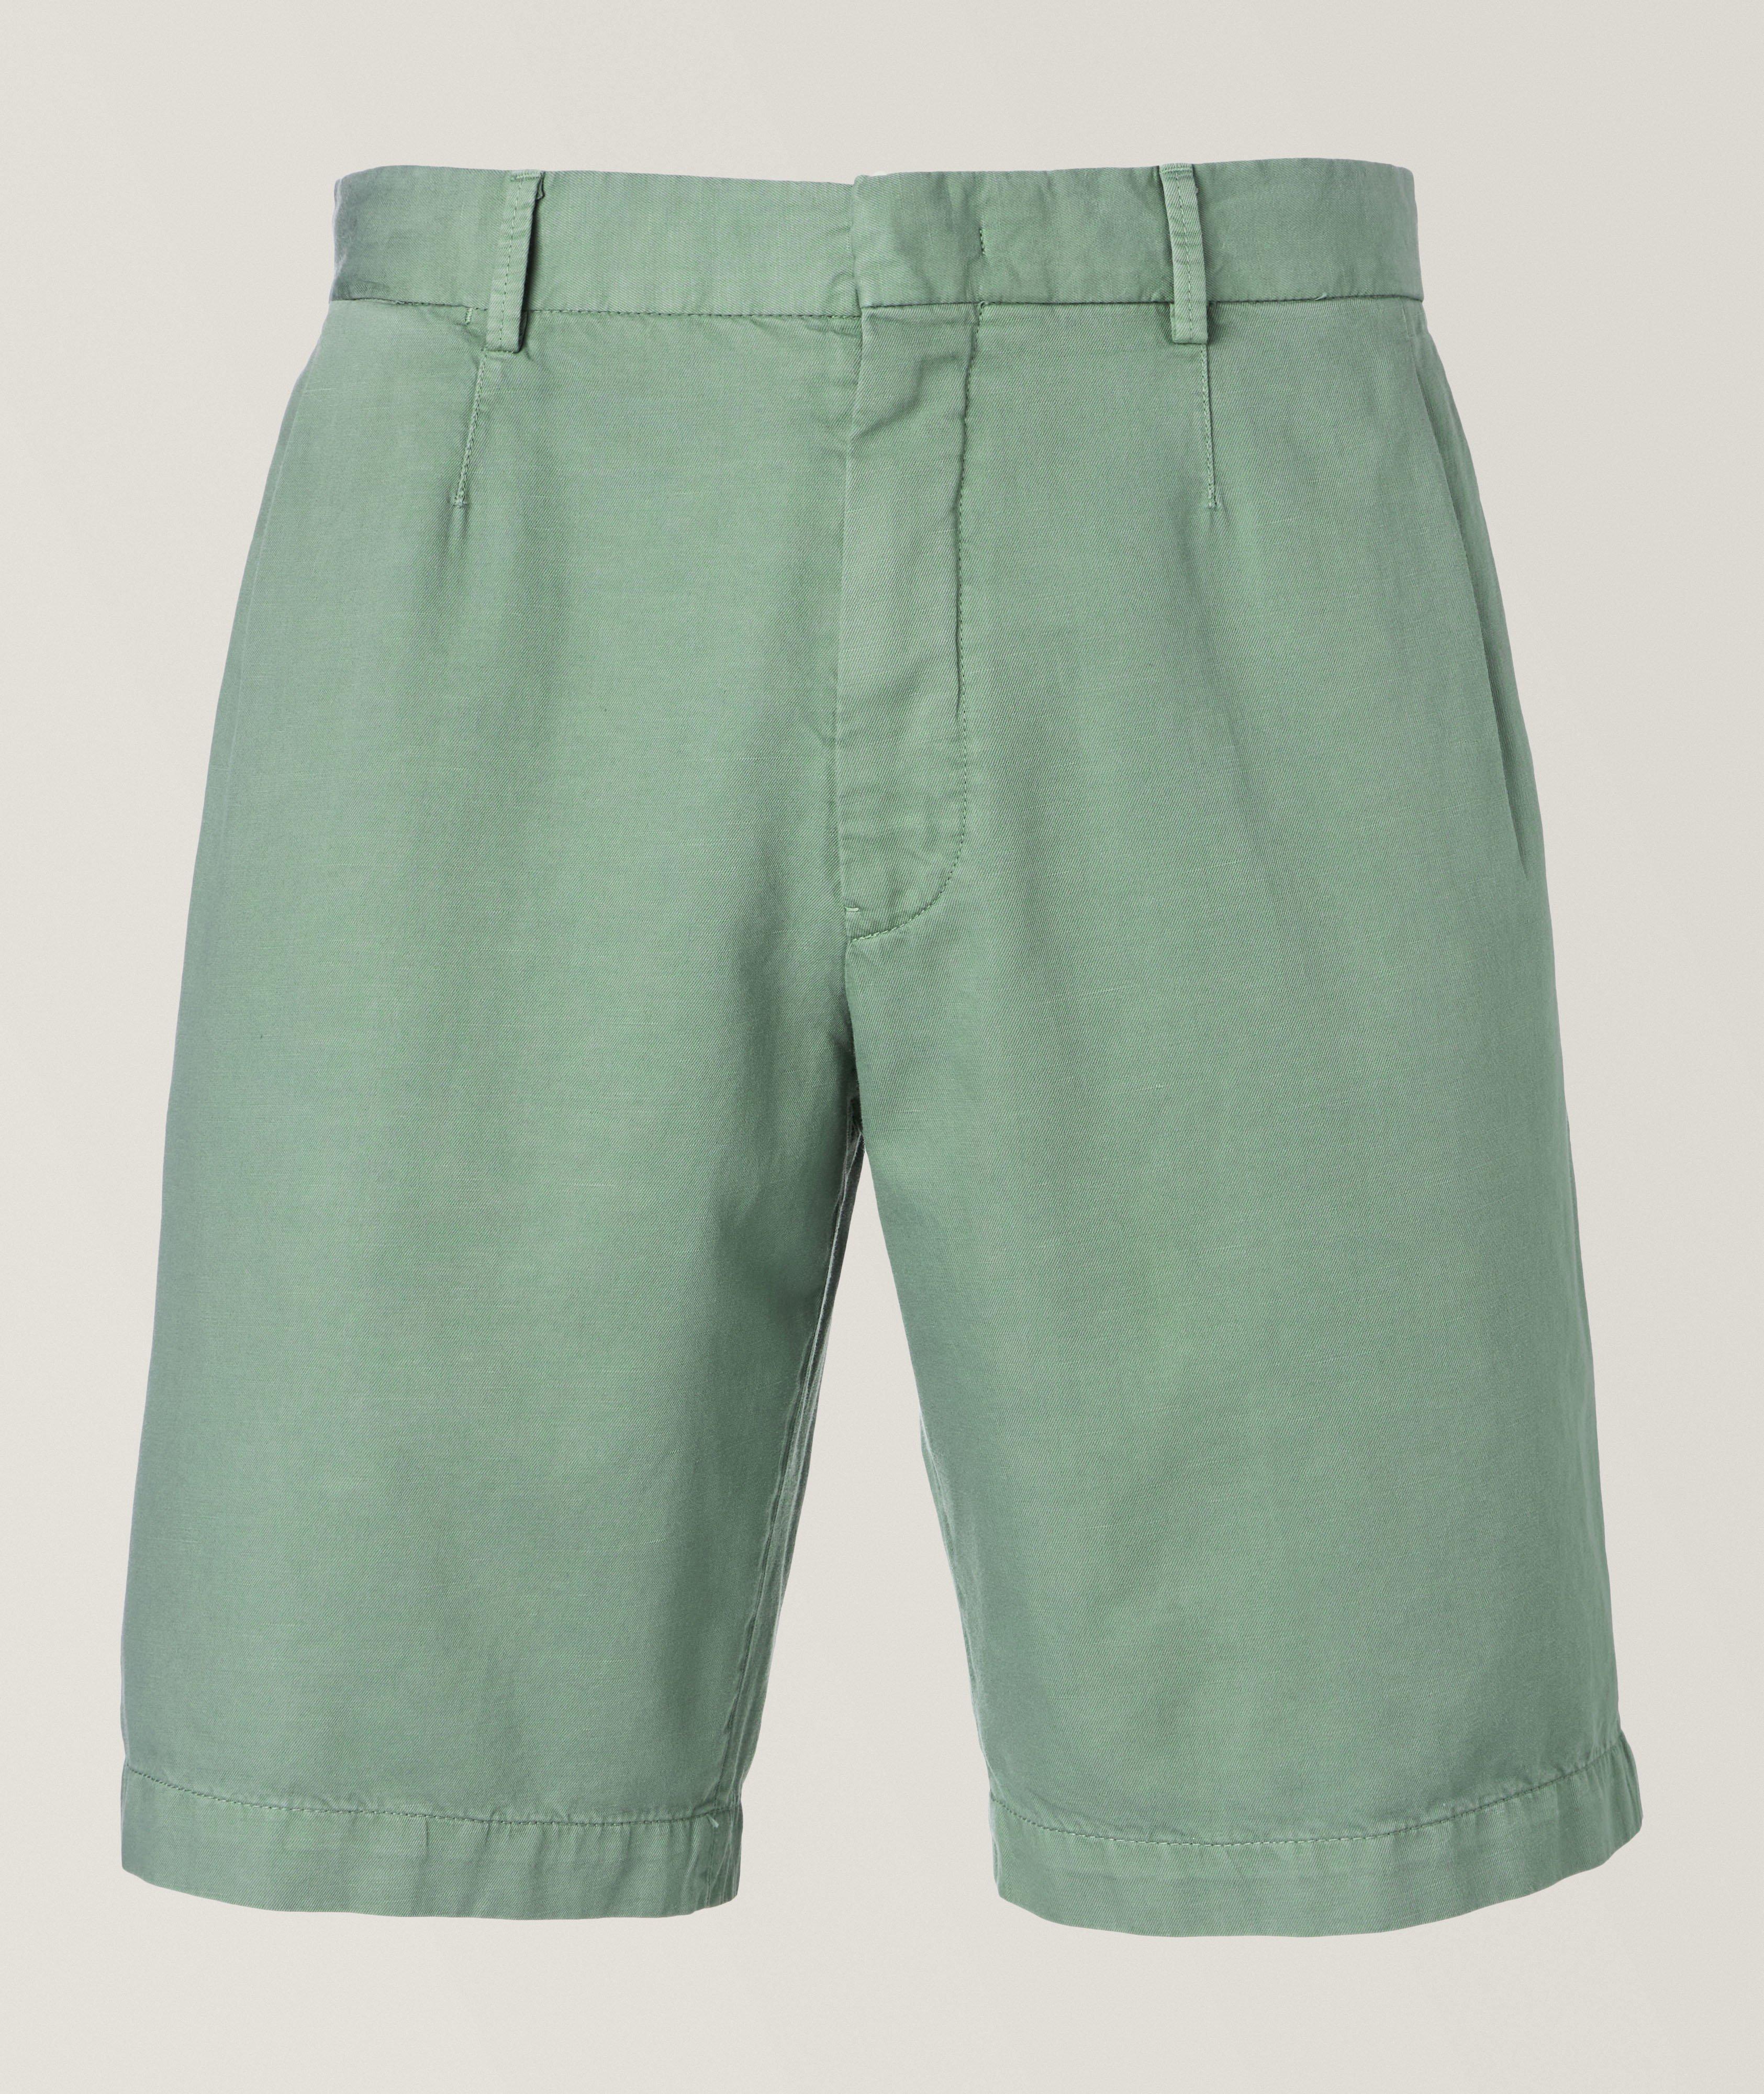 Cotton-Linen Summer Chino Shorts image 0